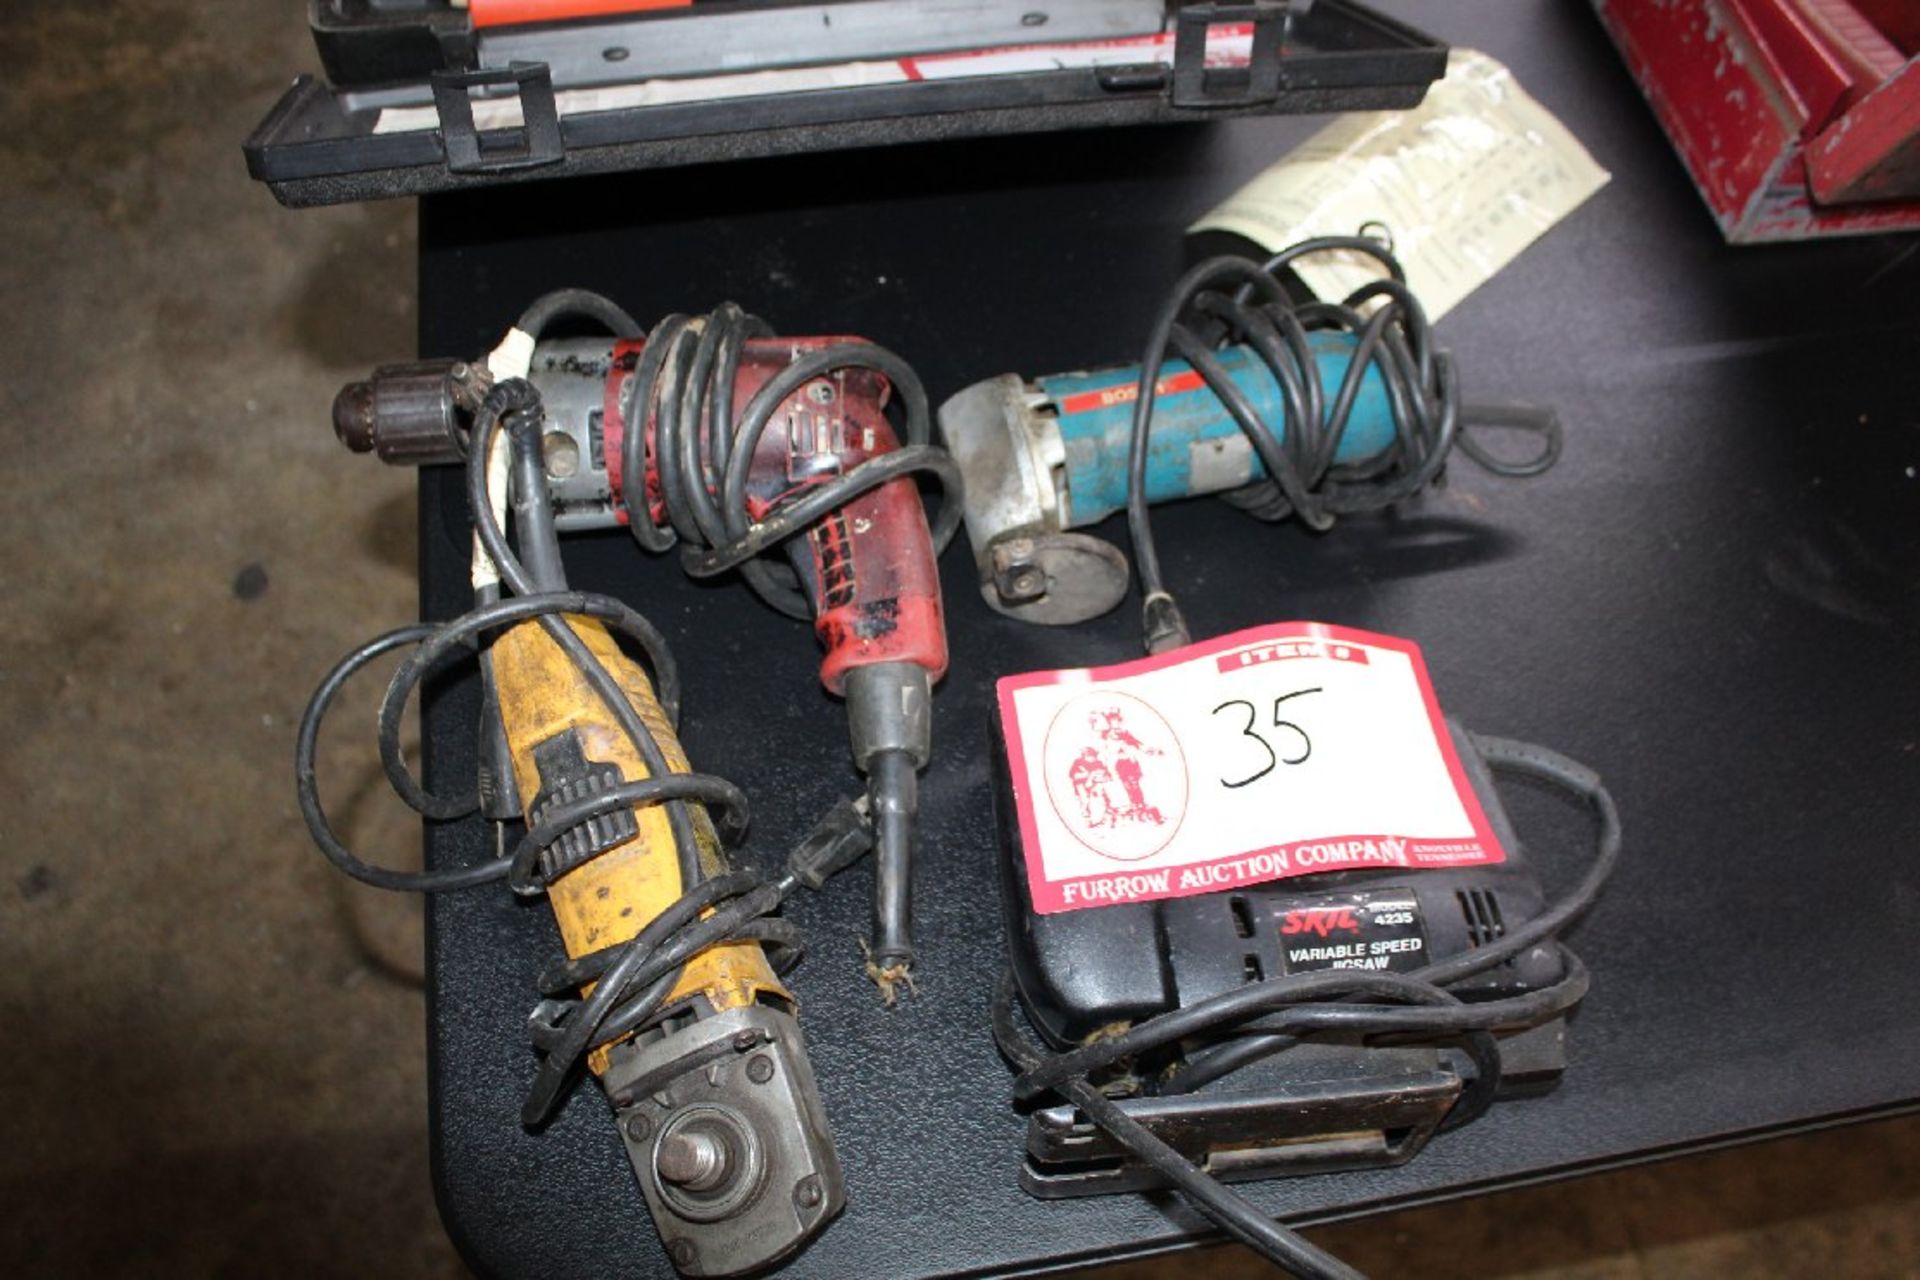 Assortment of 4 Corded Power Tools, Skill Jigsaw, DeWalt Angle Grinder, Milwaukee 3/8 Drill, Bosch